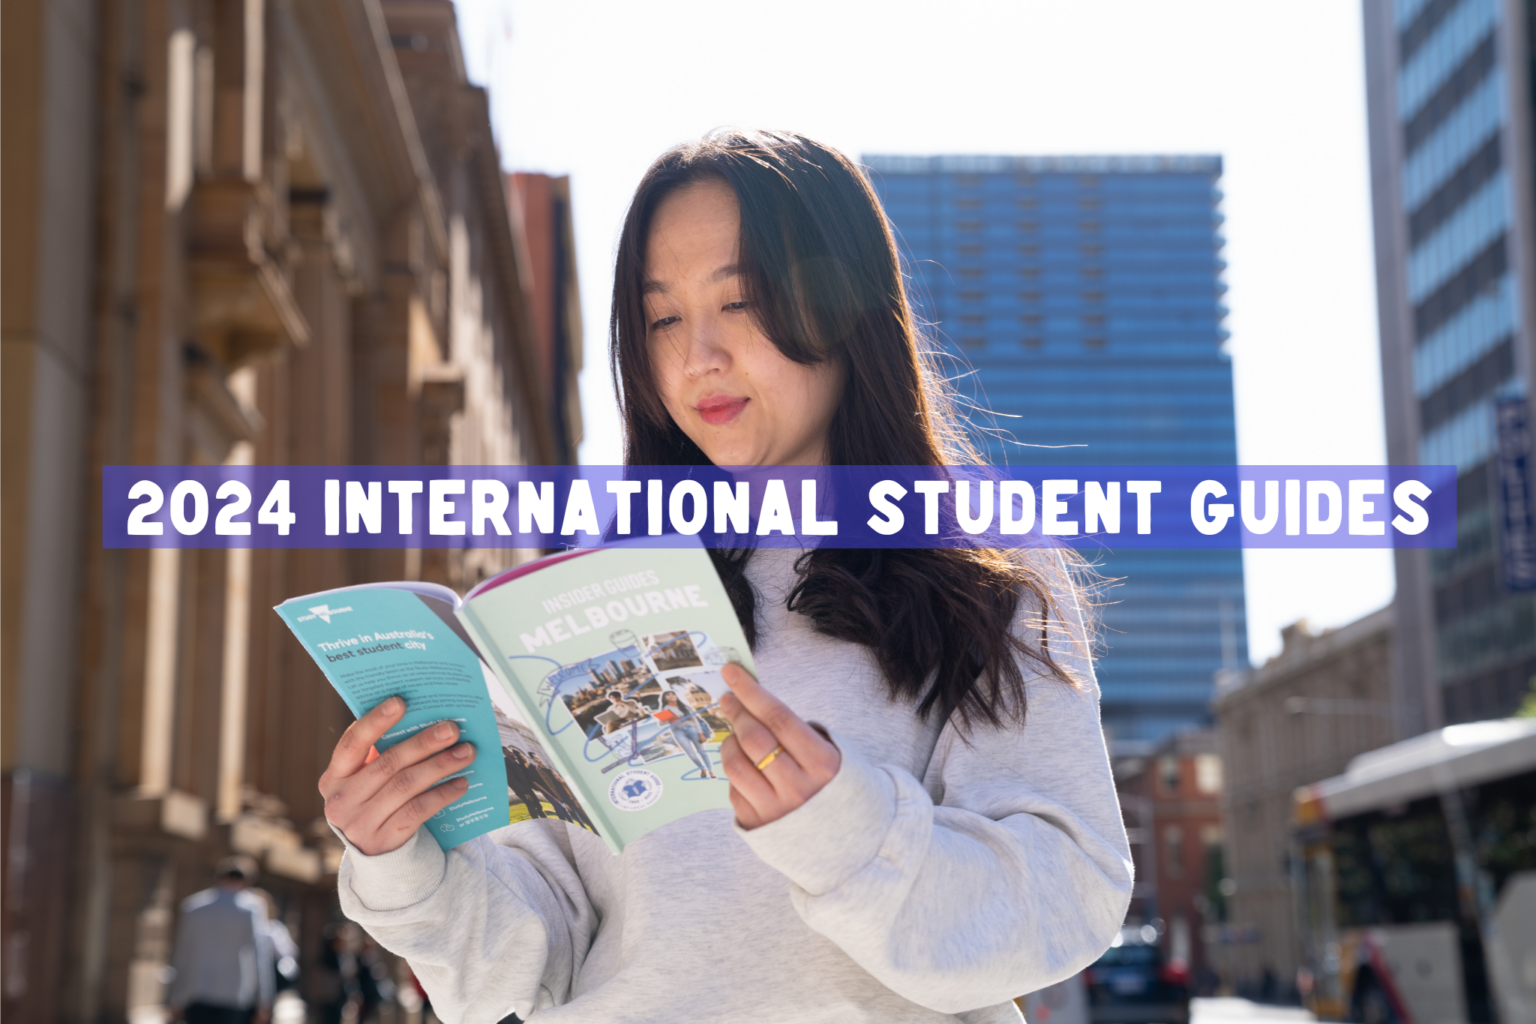 2024 International Student Guides 1536x1024 